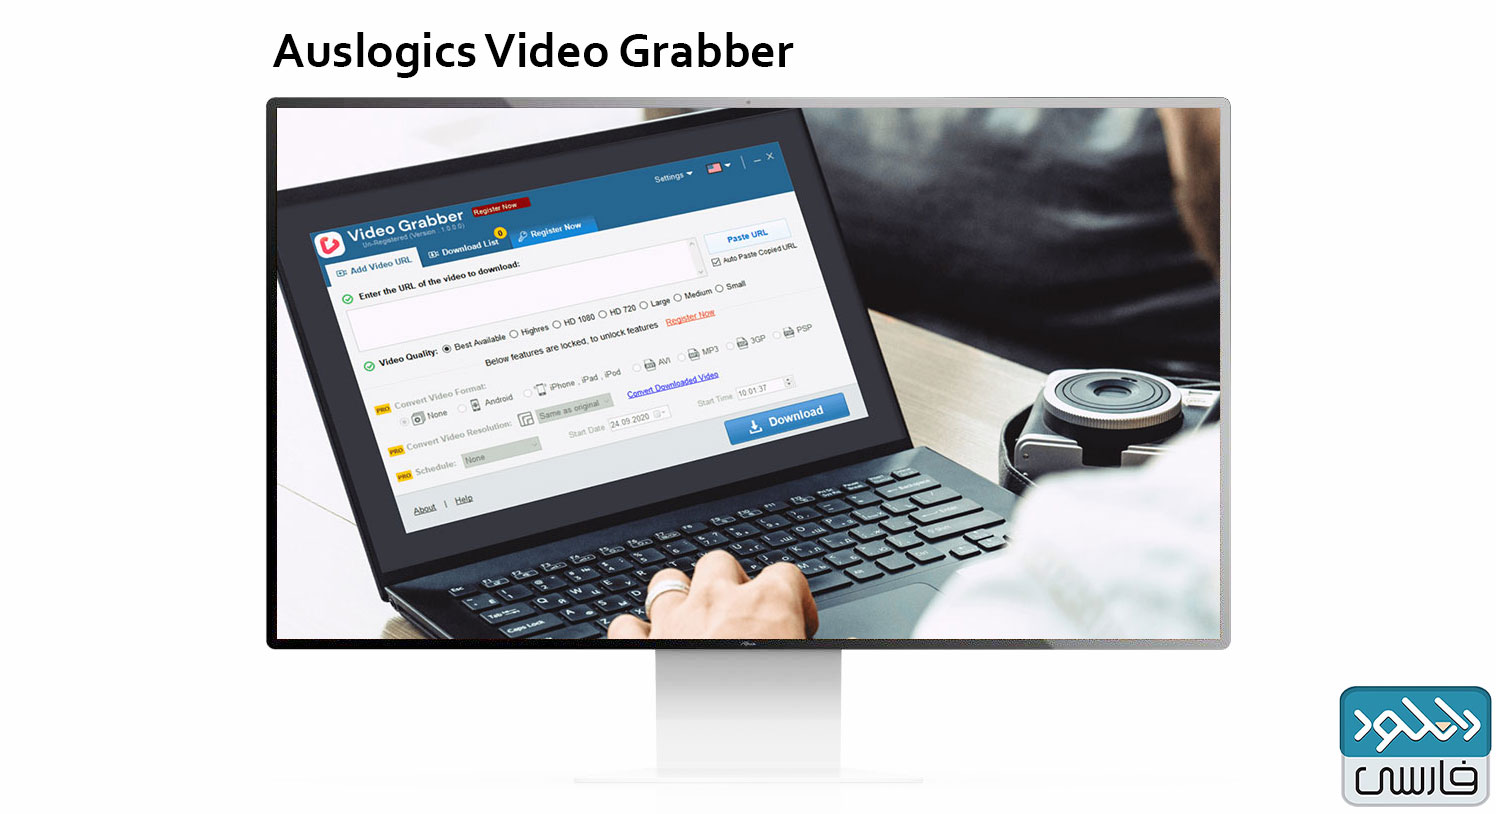 Auslogics Video Grabber Pro 1.0.0.4 download the new version for mac